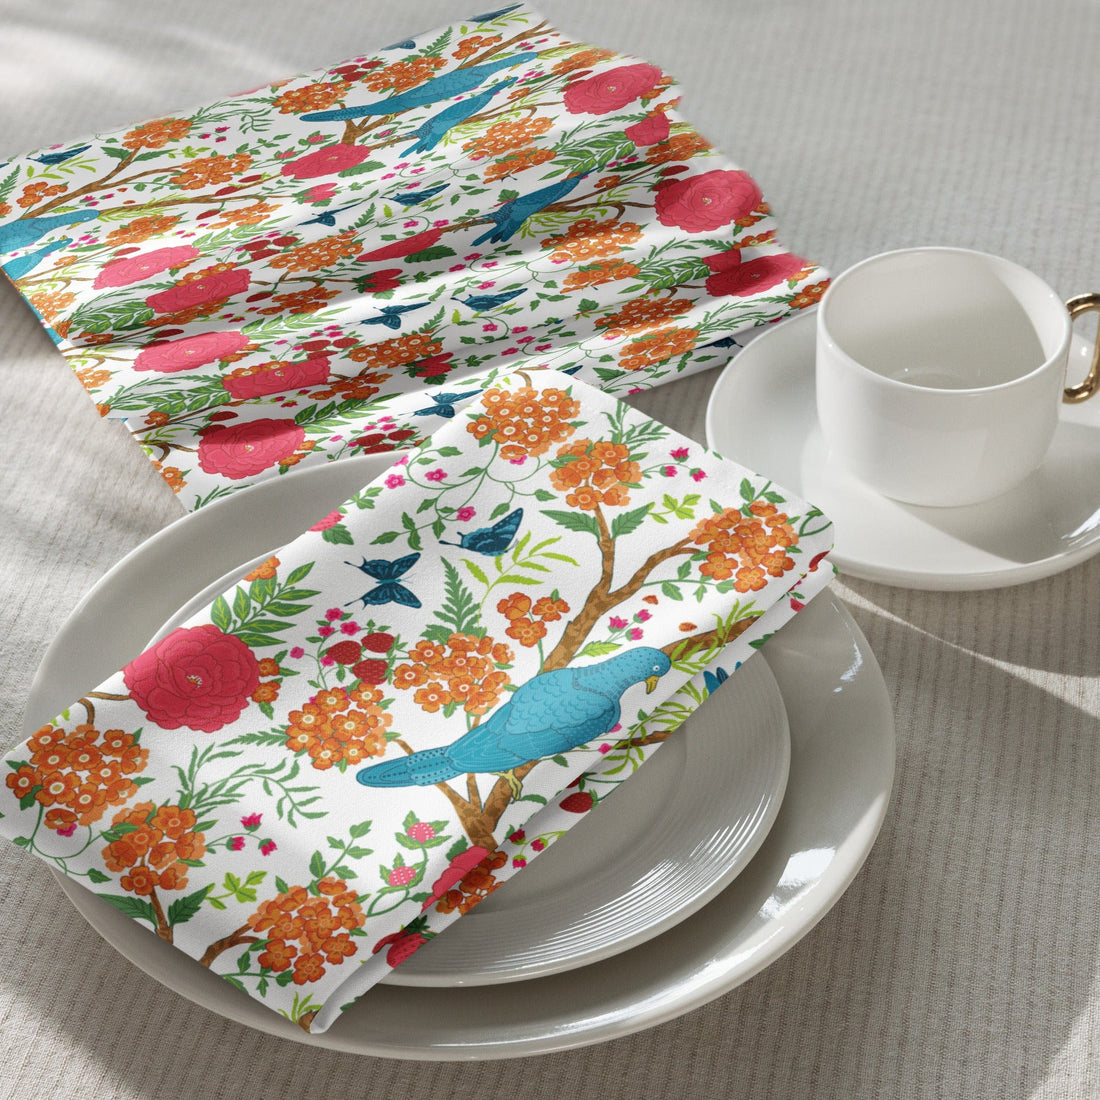 Kate McEnroe New York Chinoiserie Bird Floral Cloth Napkins, Set of 4, Vibrant Table Linens, Retro Garden Dining DecorNapkins22368271897825087136